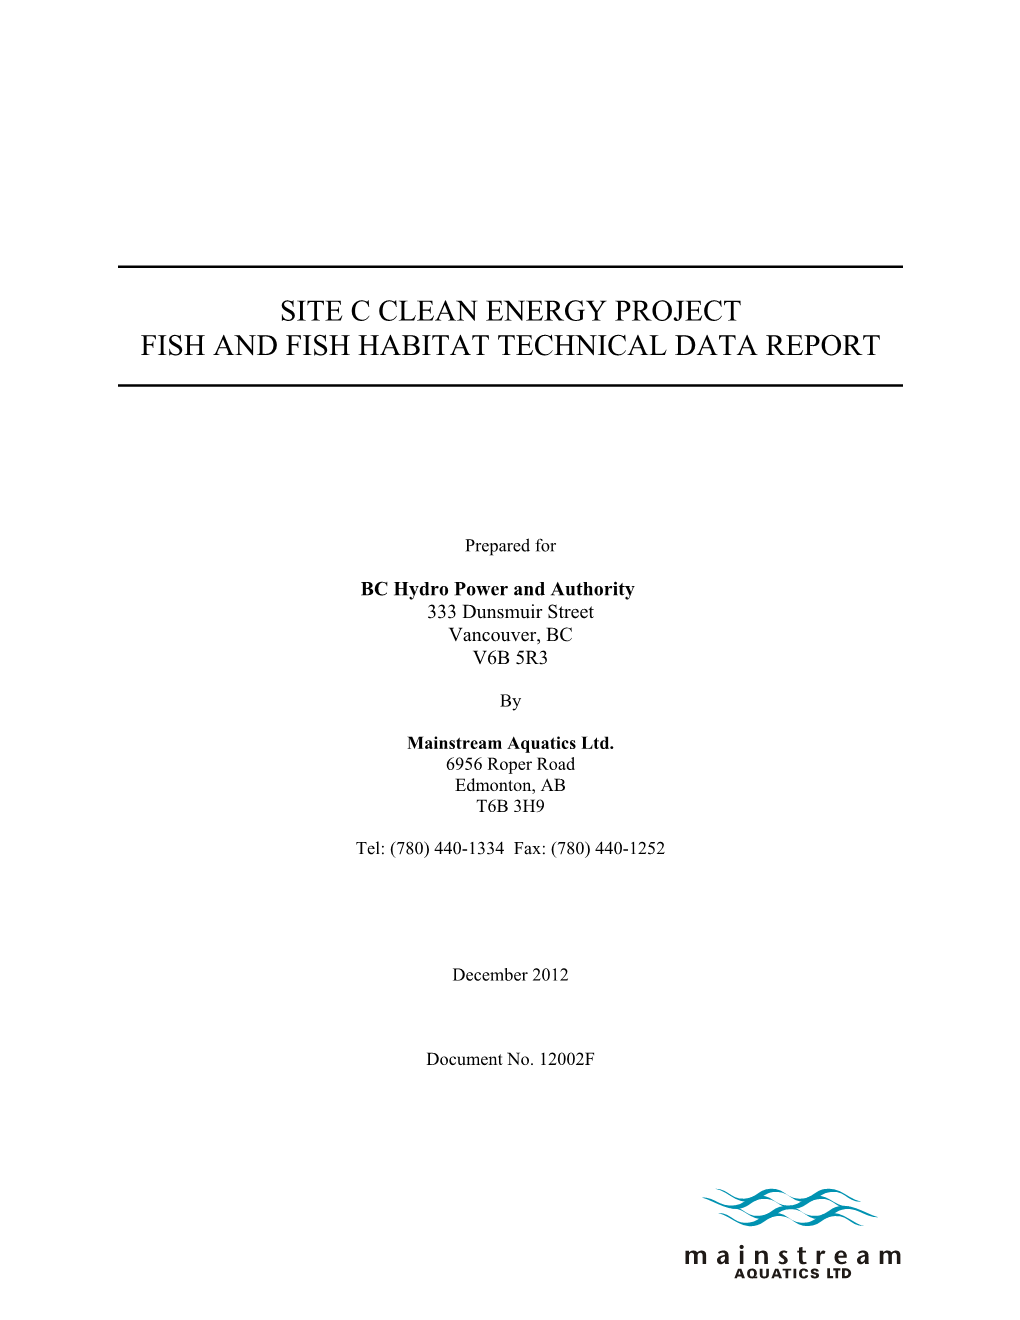 Appendix O Fish and Fish Habitat Technical Data Report